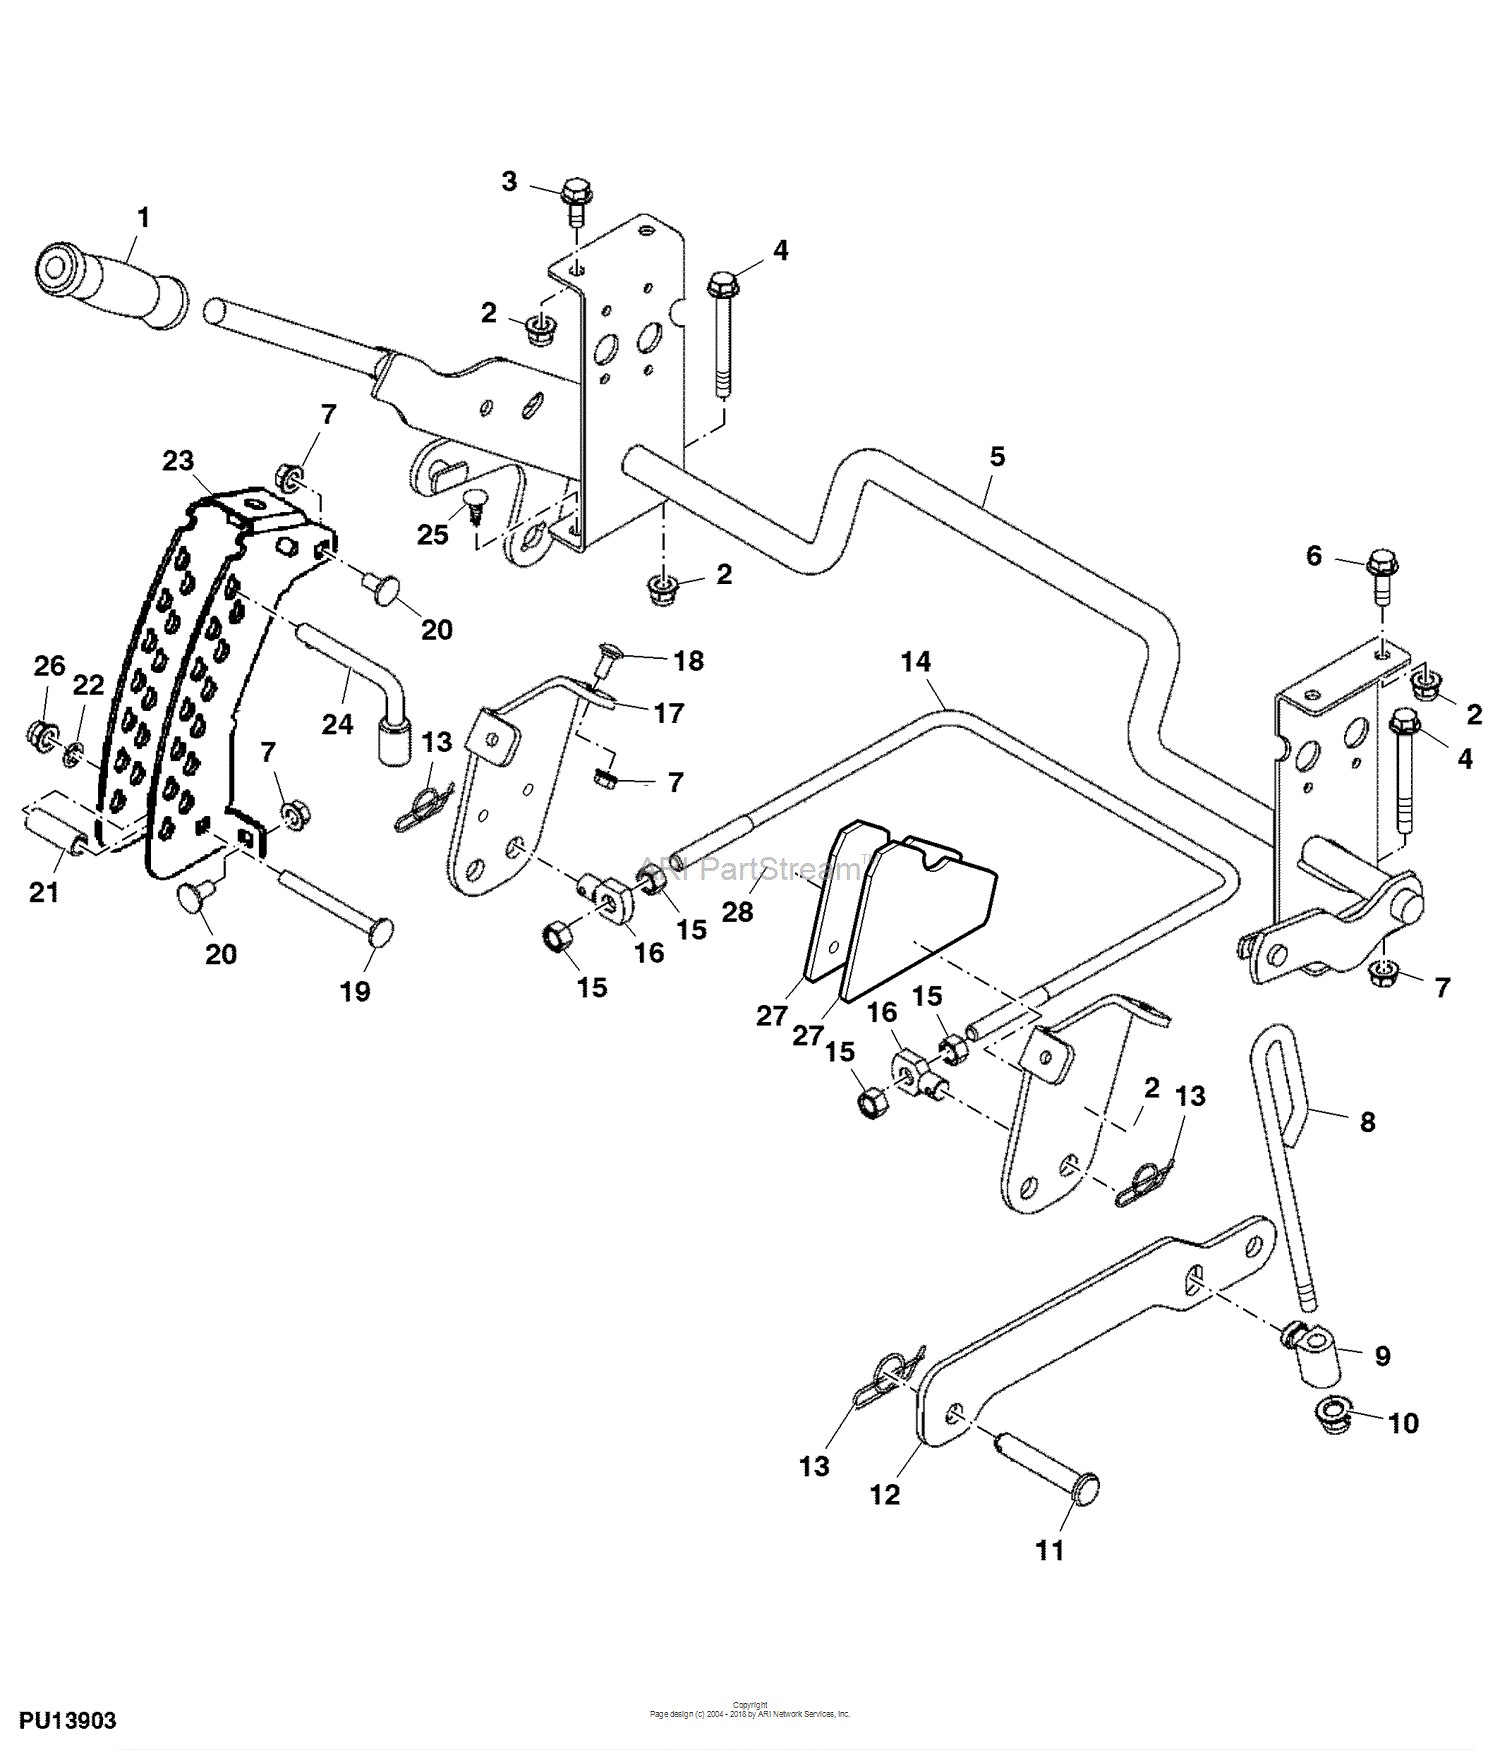 John Deere Parts Diagrams John Deere Lift Arm & Linkage